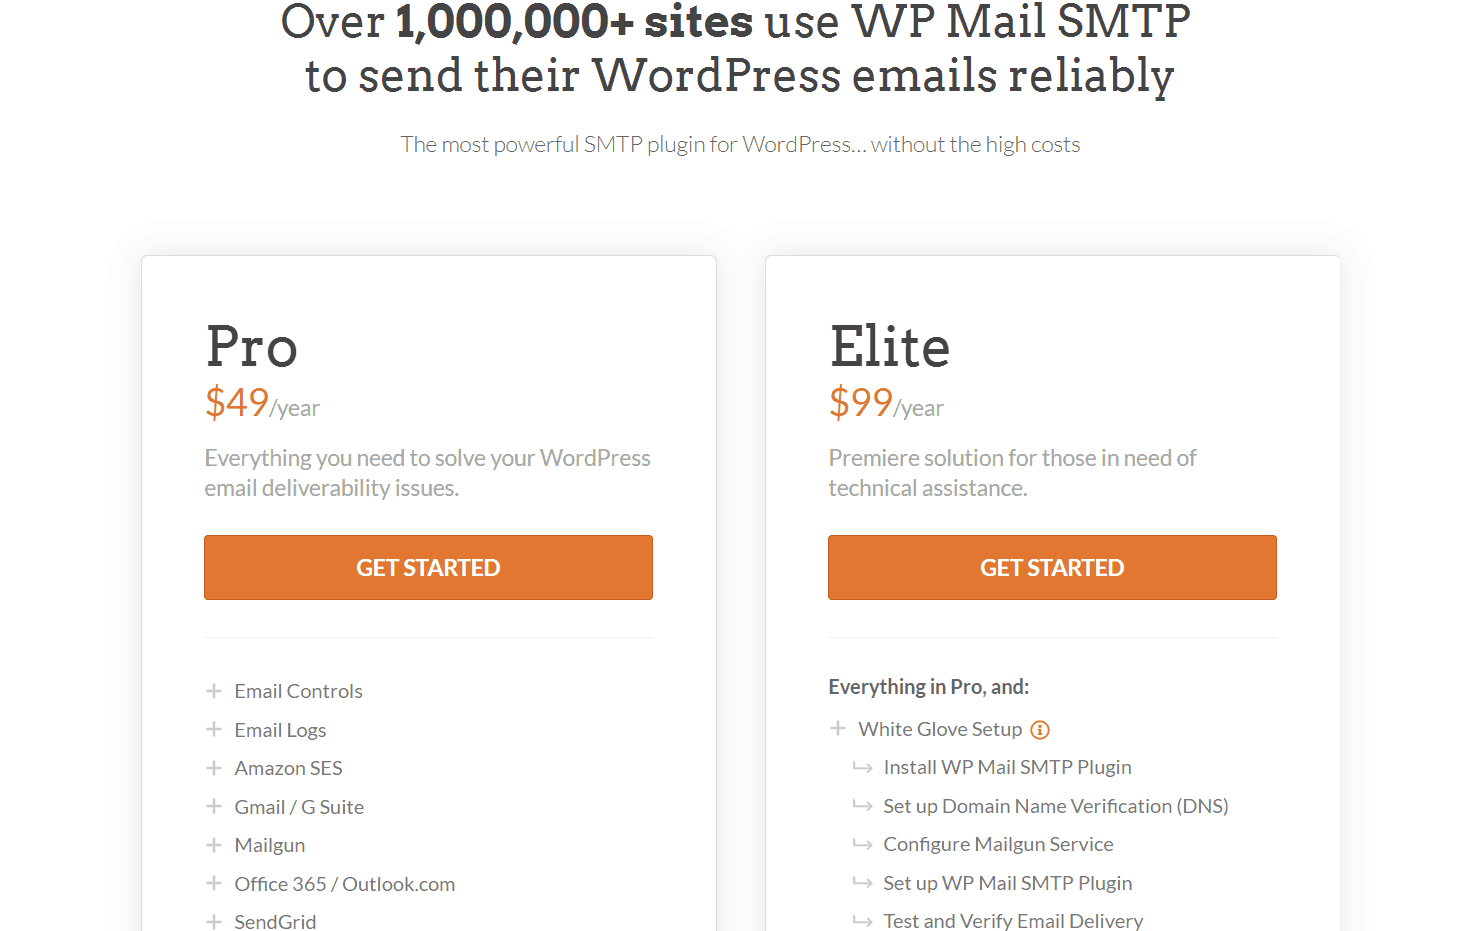 wp mail smtp plugin pricing